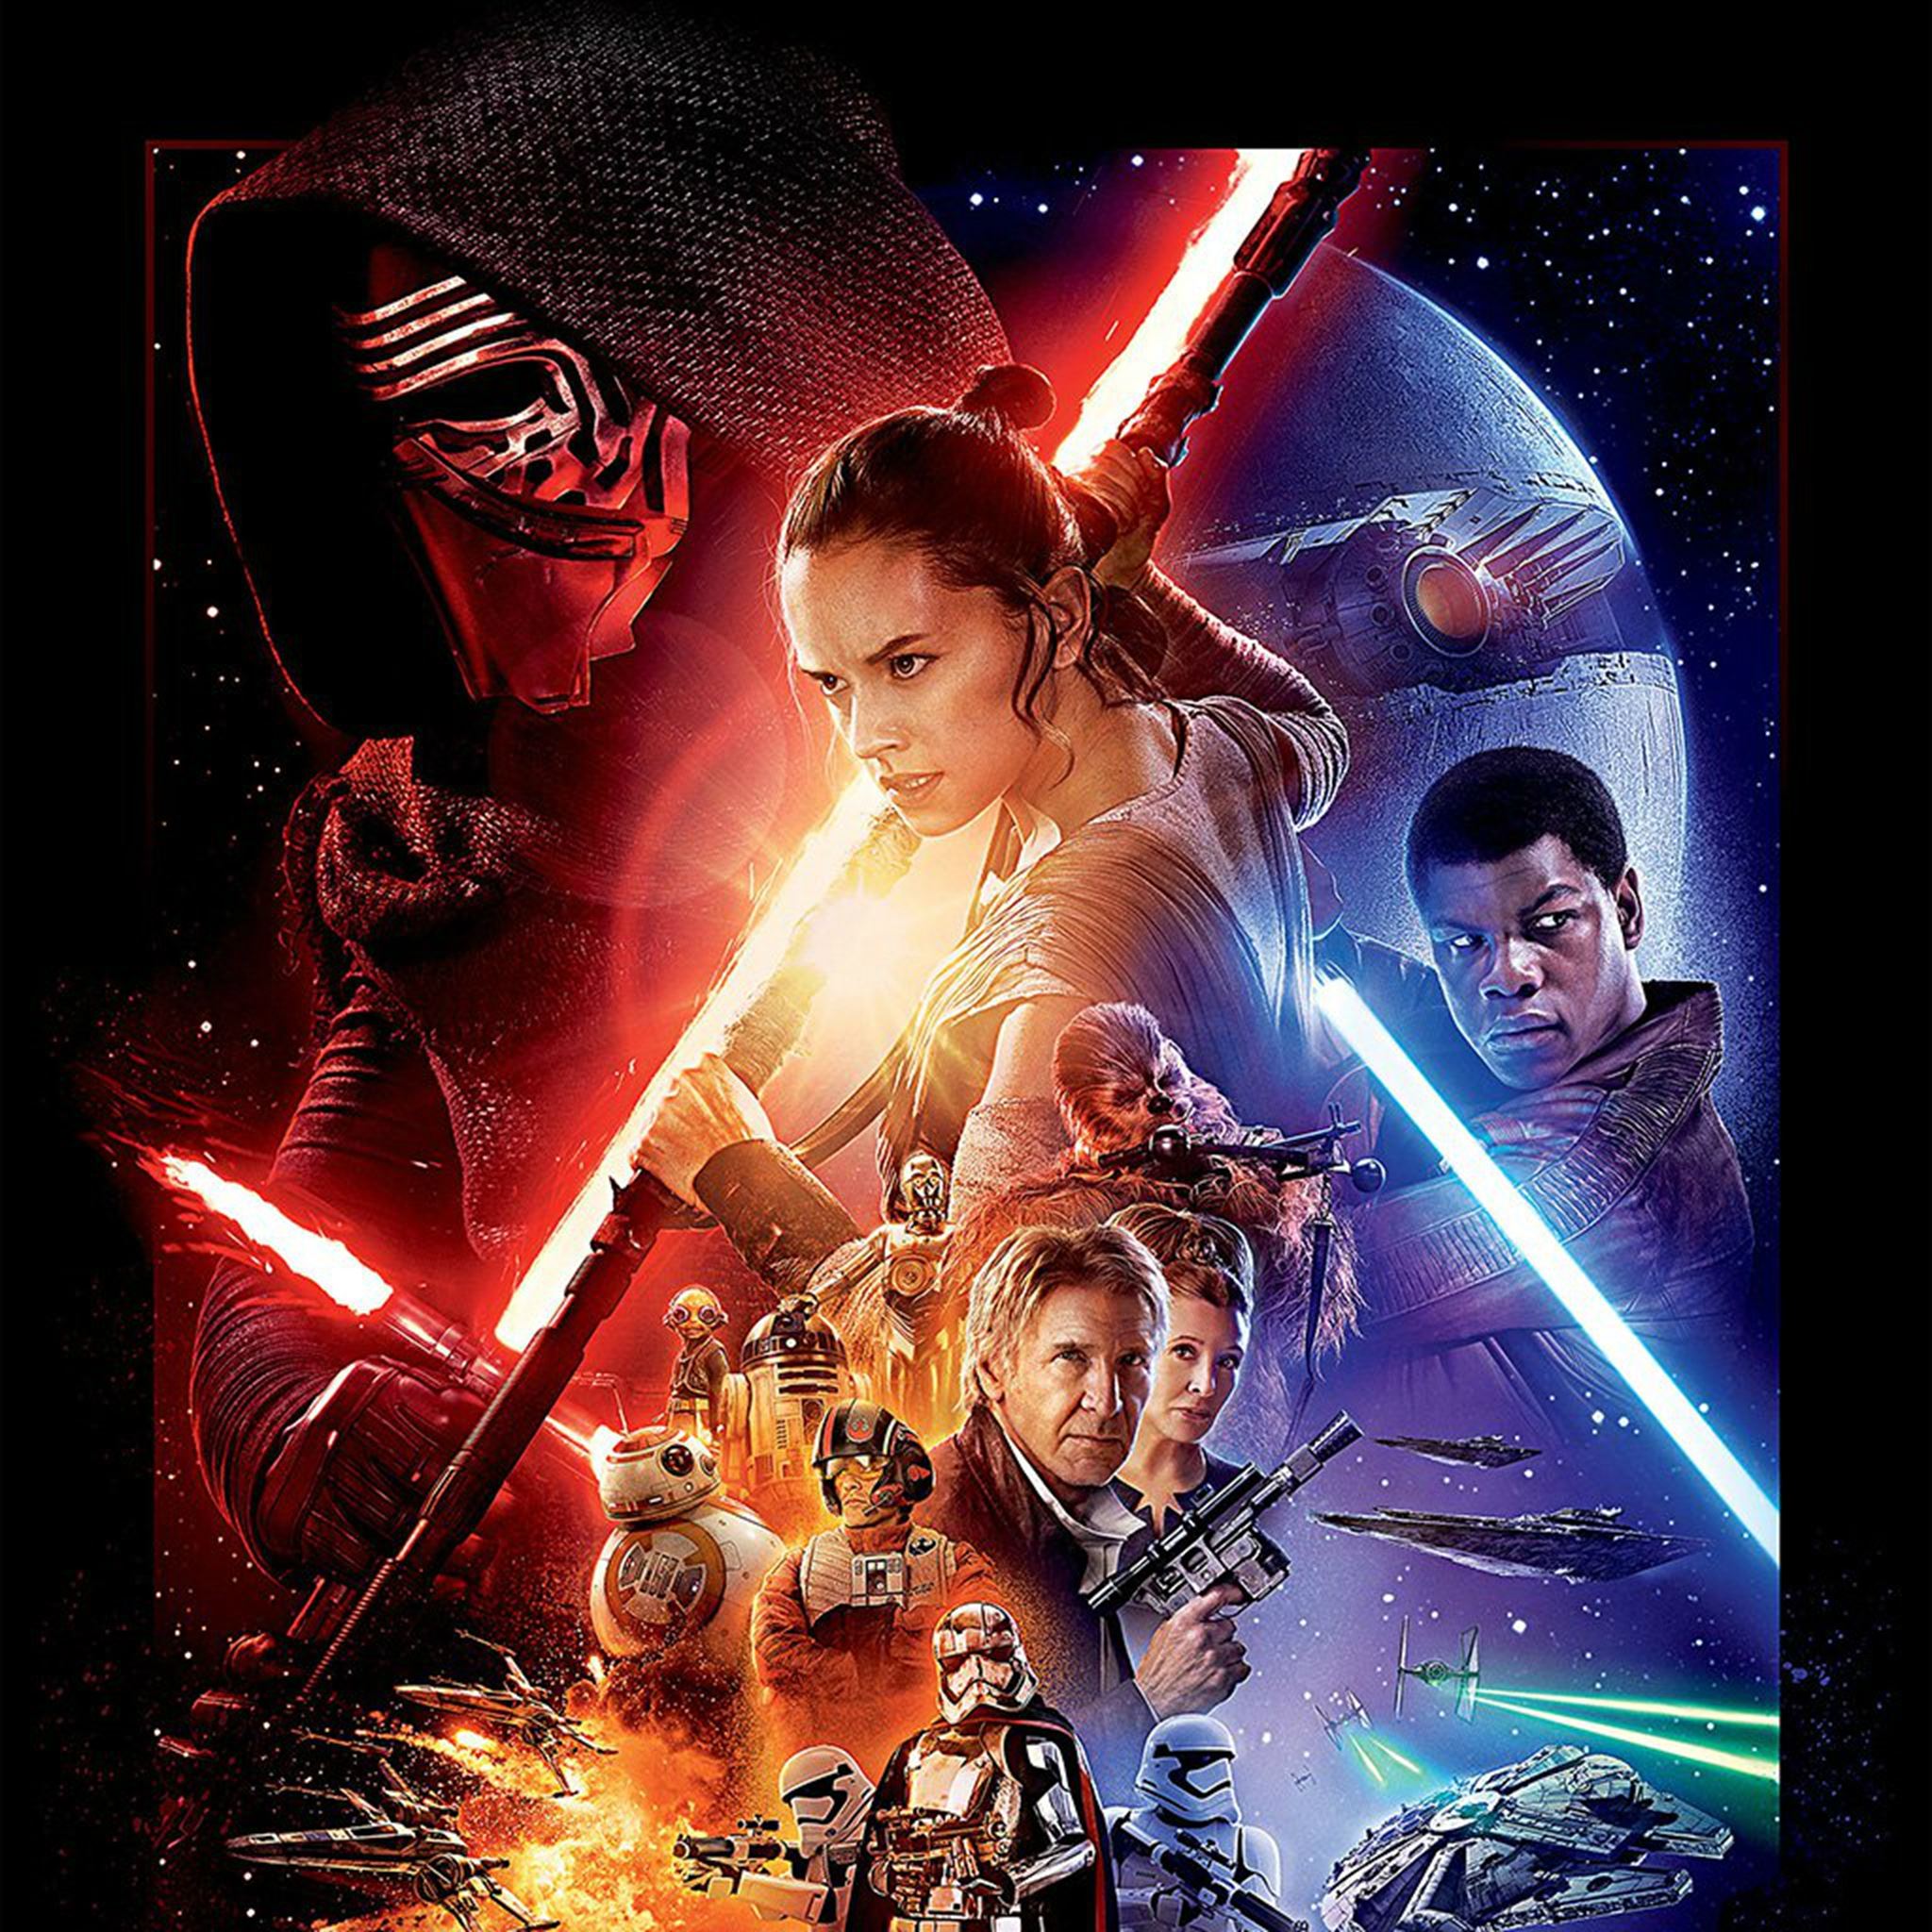 Starwars The Force Awakens Film Poster Art iPad Air wallpaper 